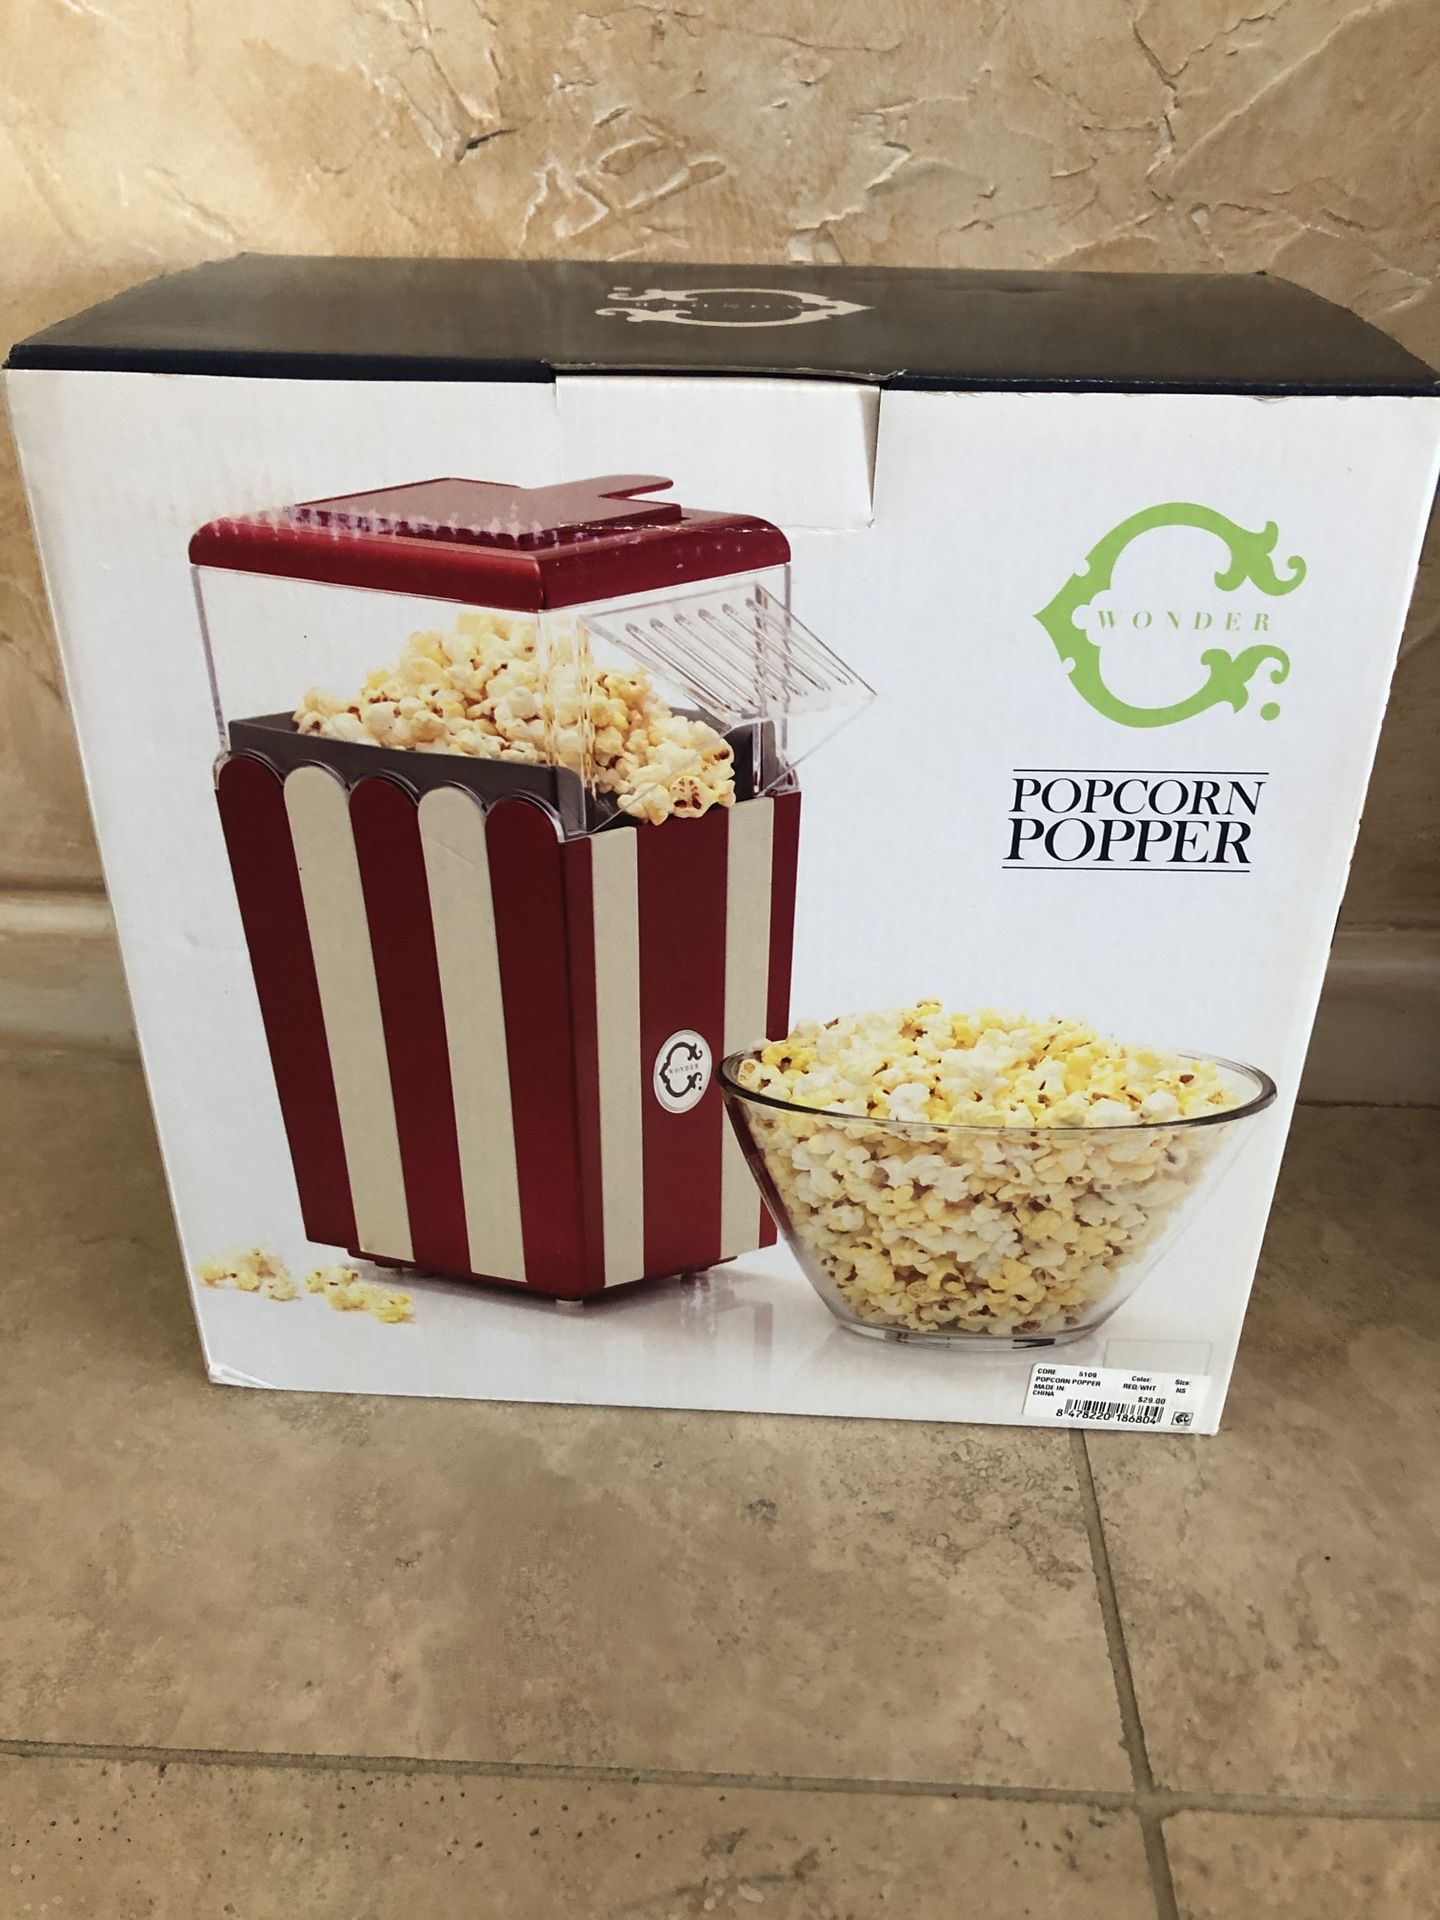 Popcorn popper with vintage look